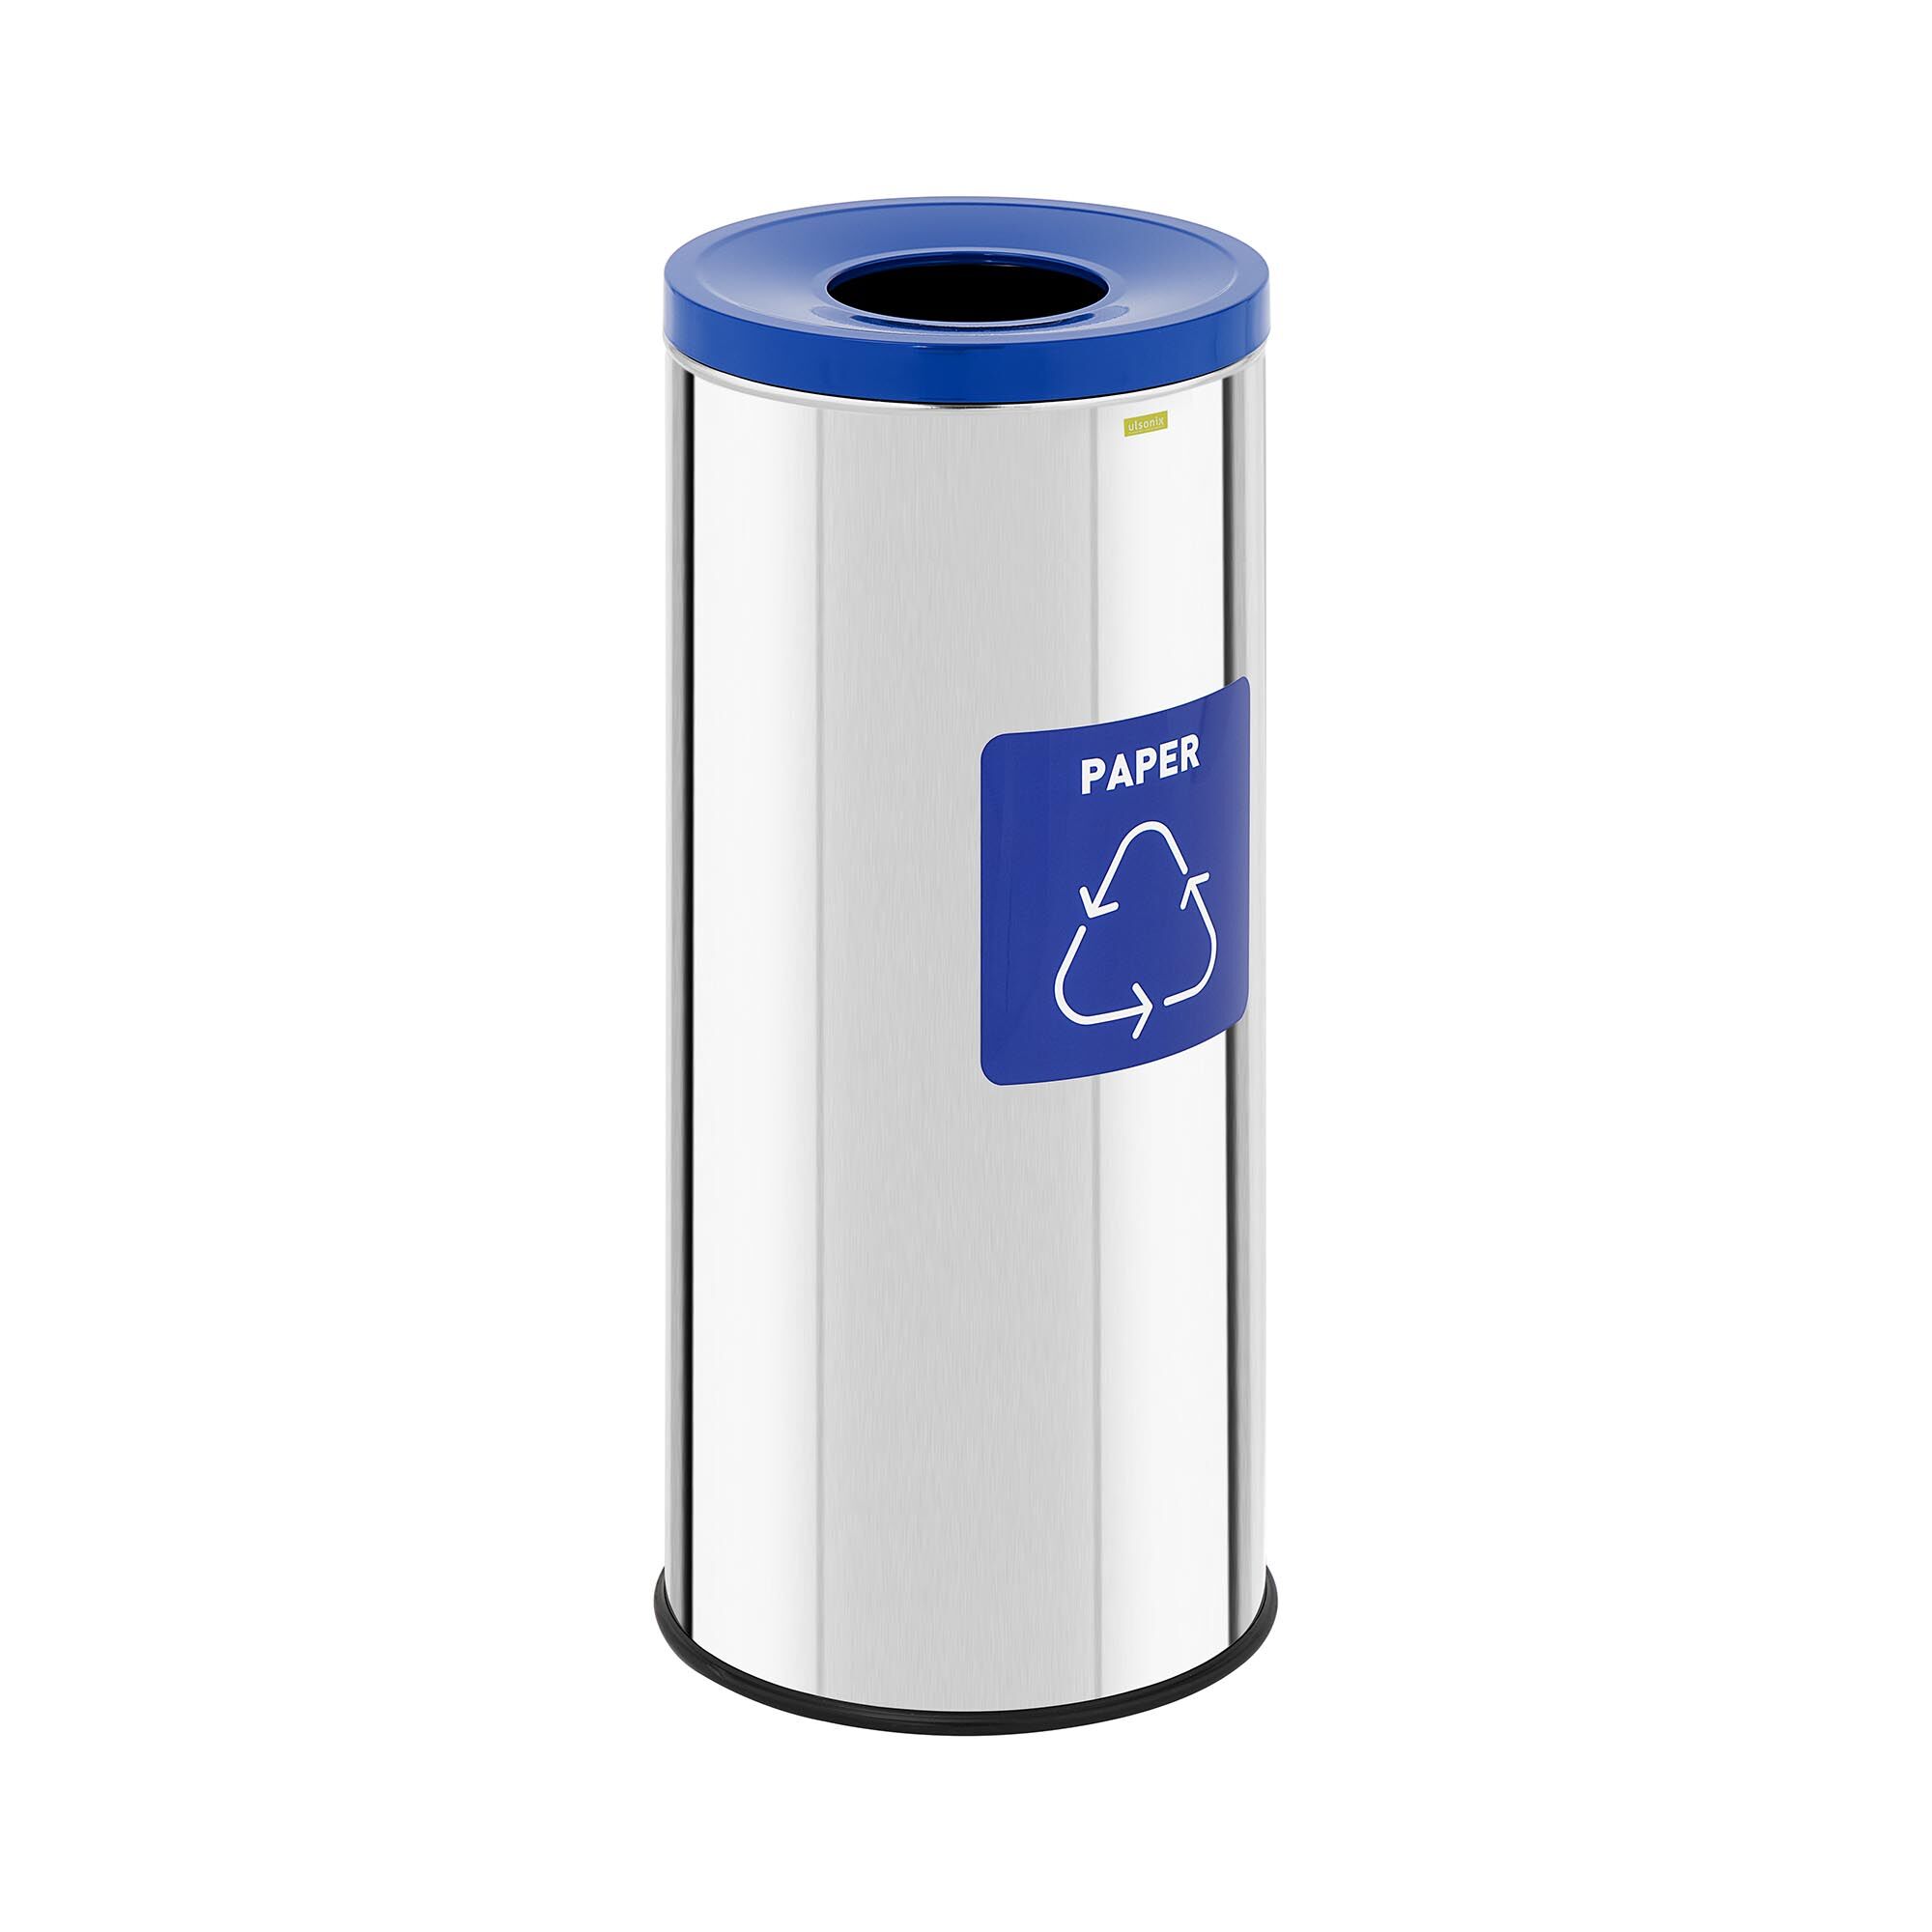 ulsonix Kildesorteringsbeholder - 45 L - blank stål - etikett for resirkulerbart materiale - papir 10050291